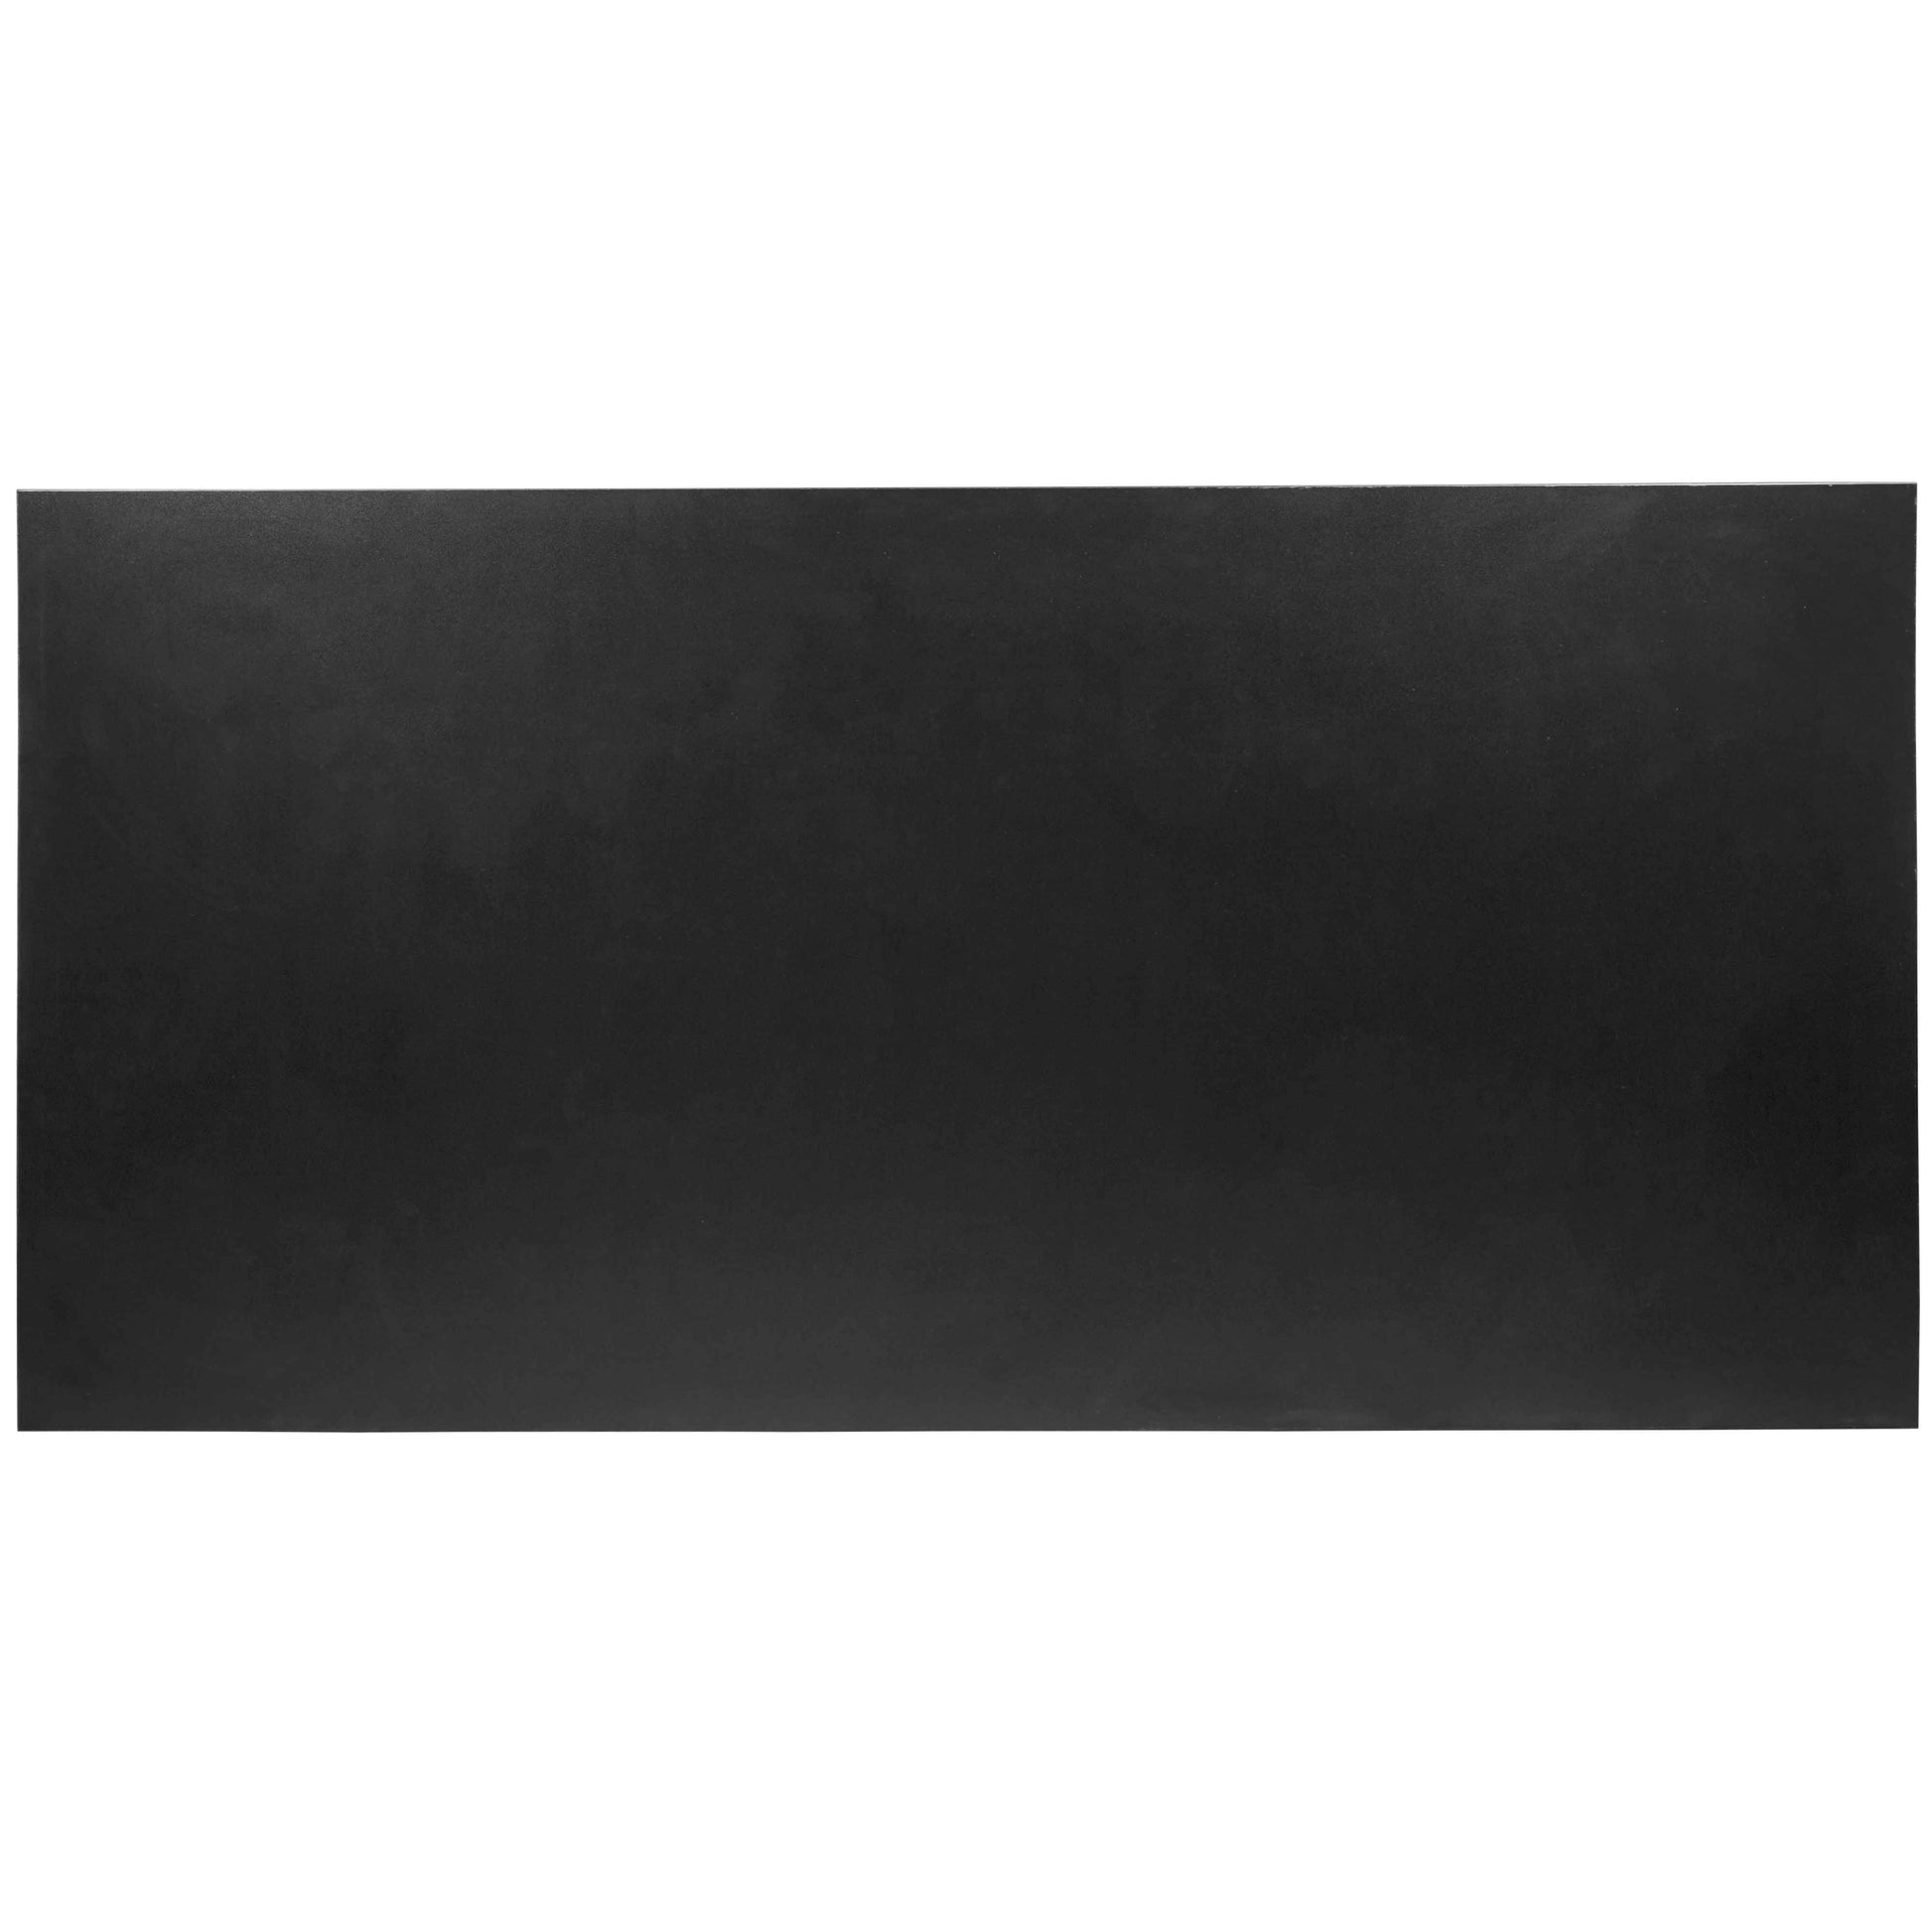 Universal Desk Top - 30" x 60" Black